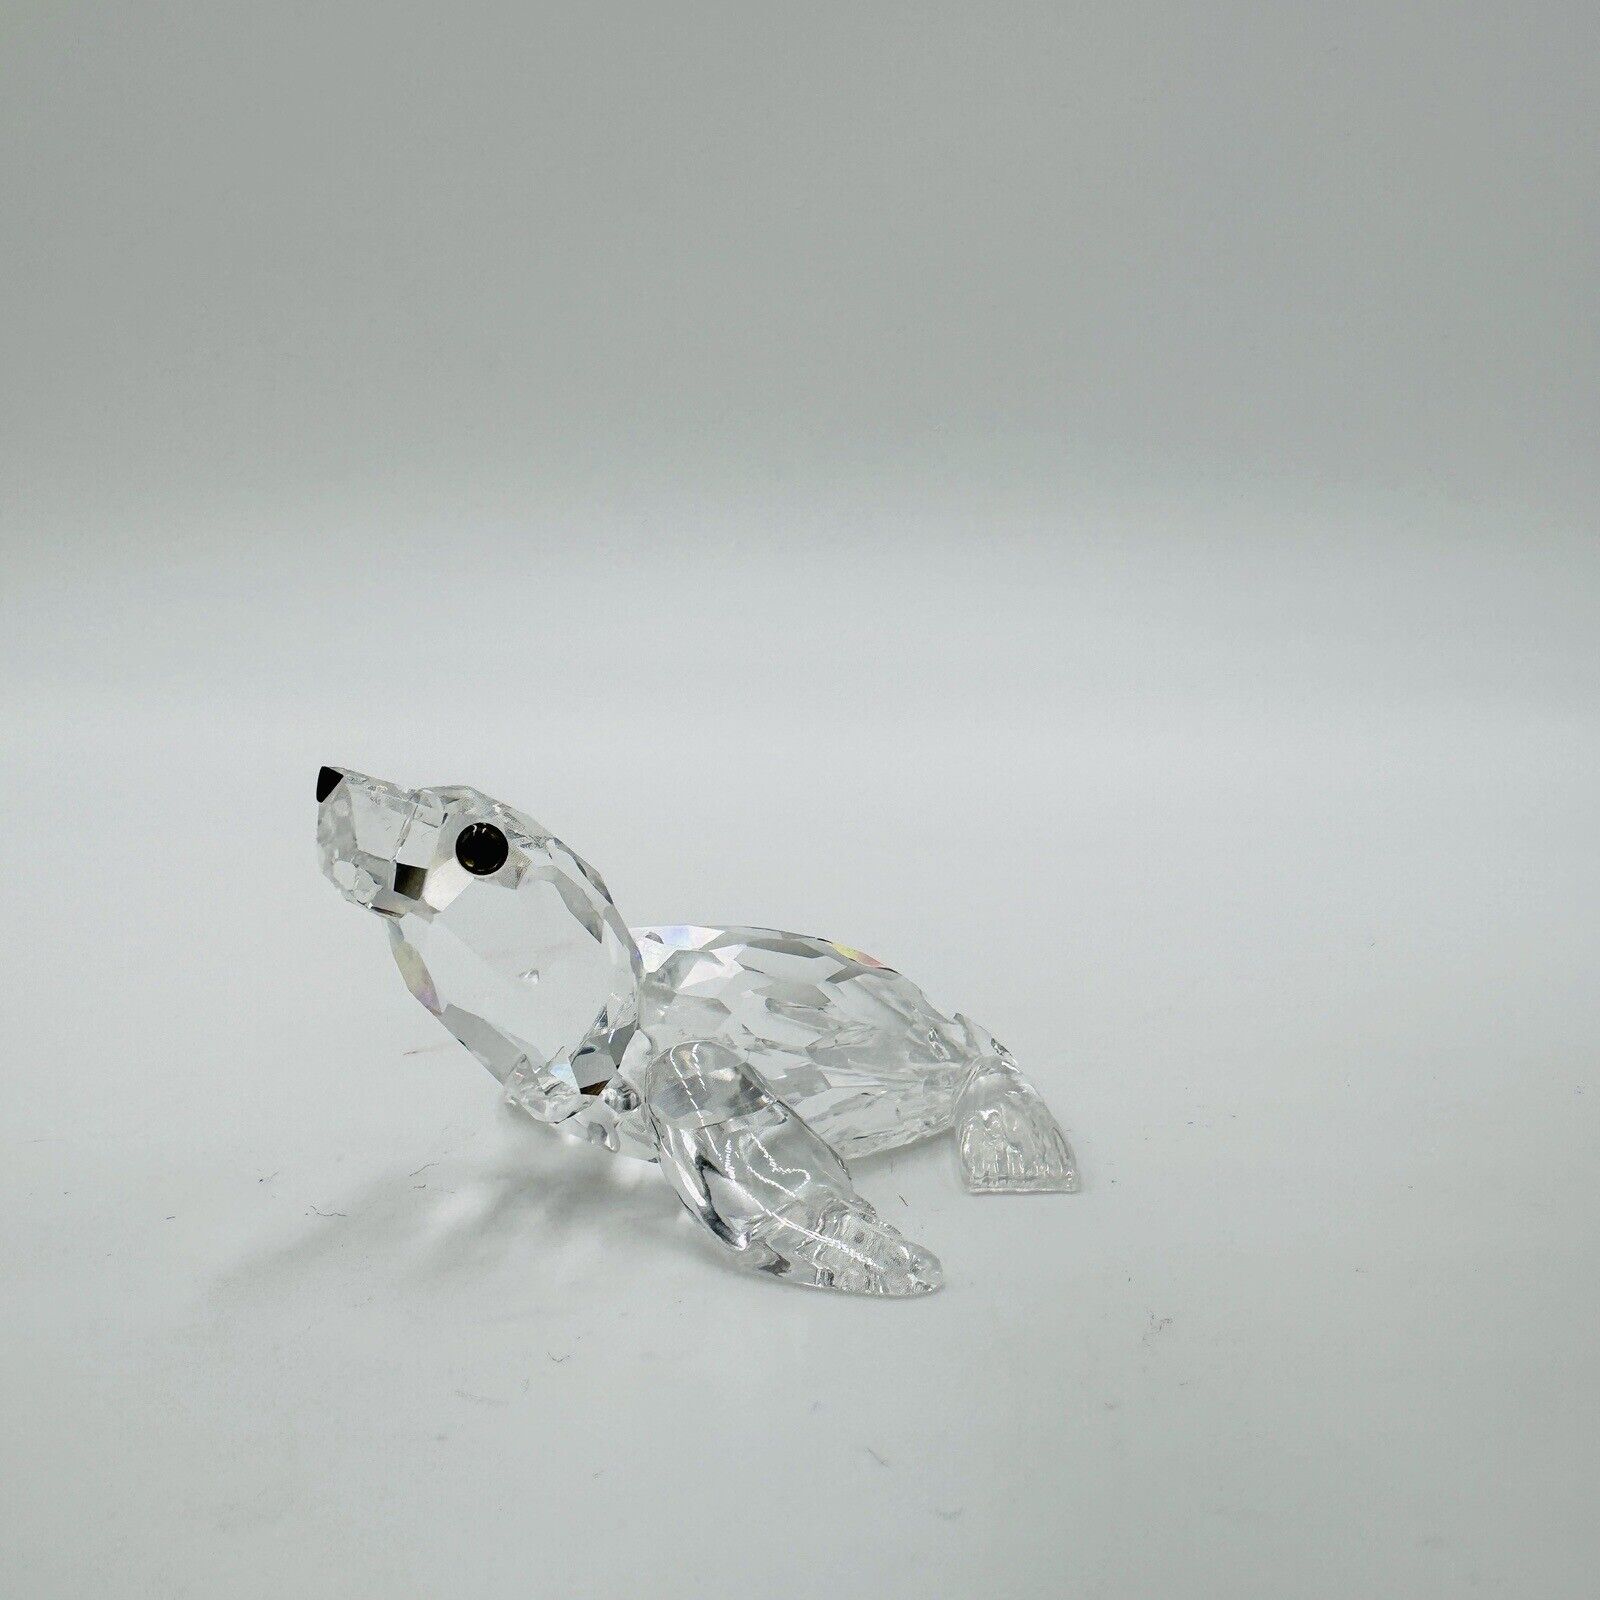 Swarovski Crystal Seal Figurine Clear Iridescent Austria Made Retired Vintage 